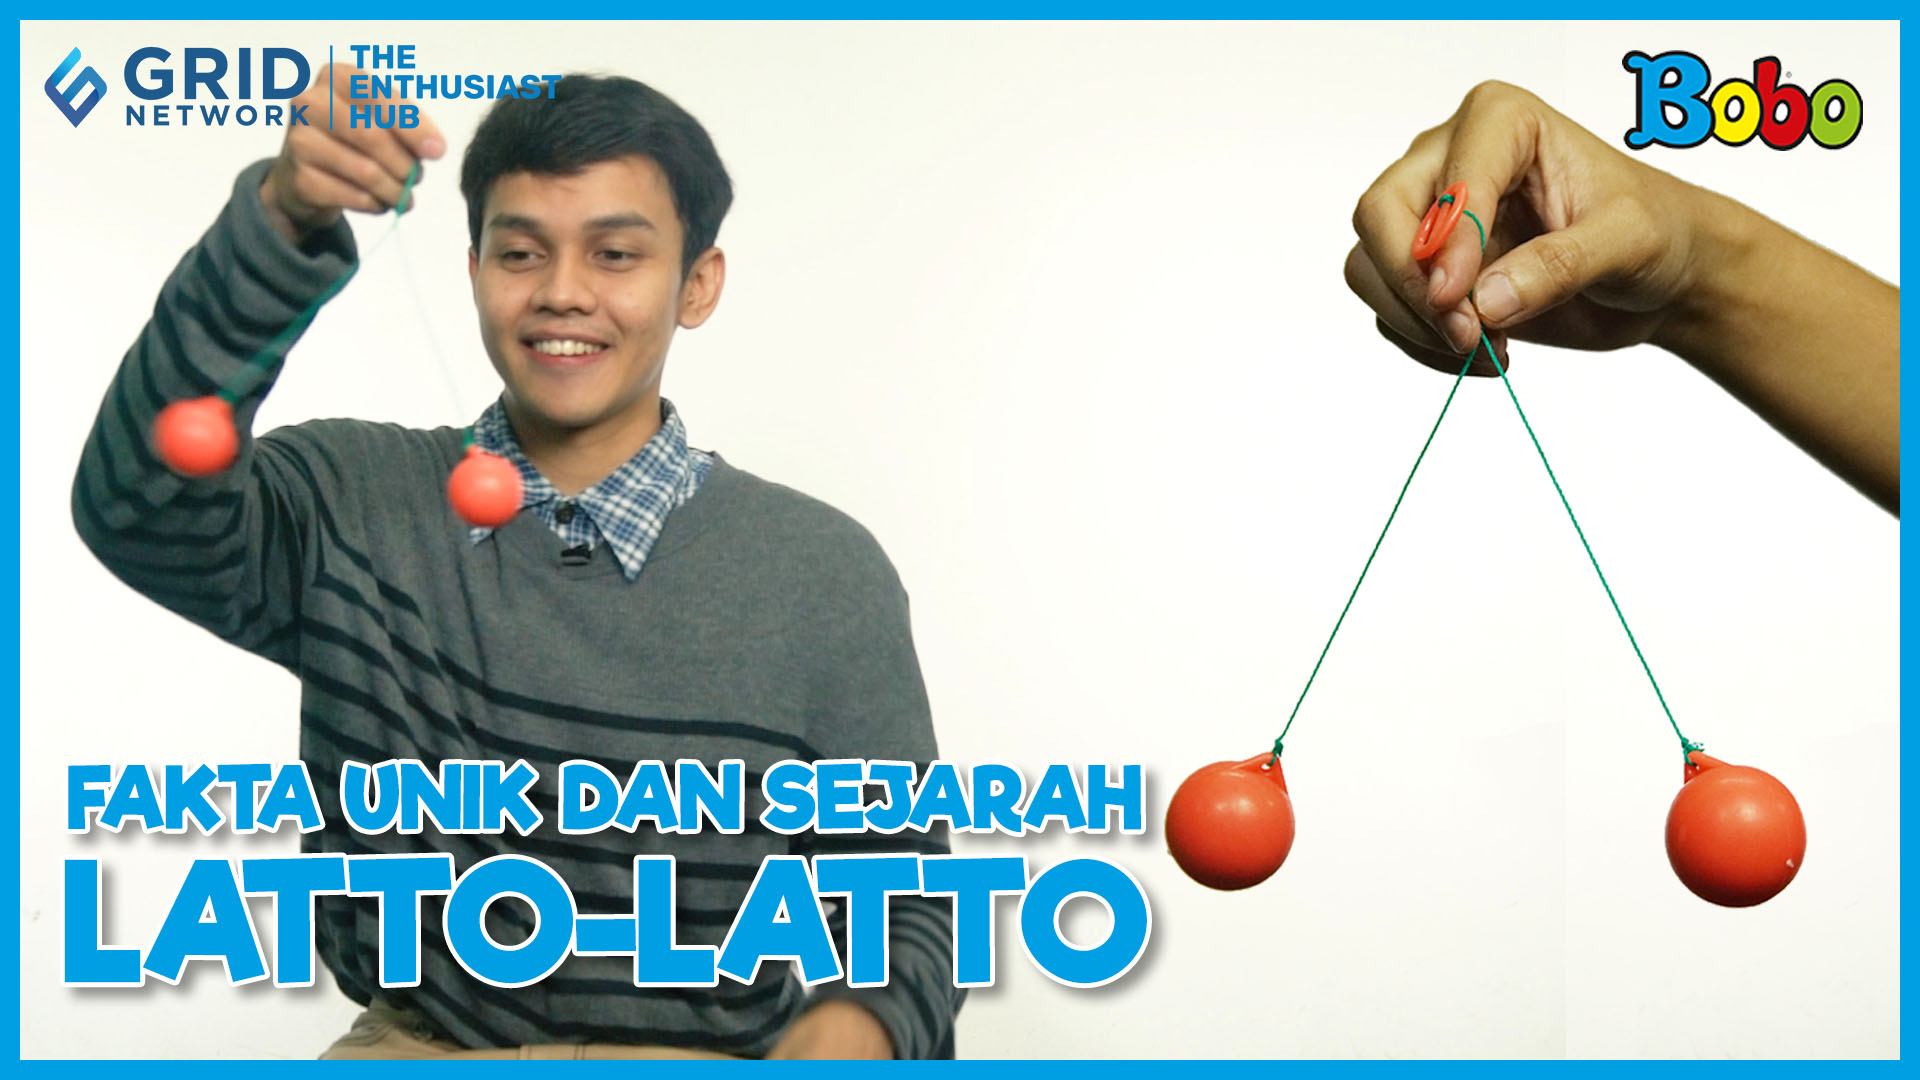 Latto-Latto - Fakta Unik dan Sejarah Latto-Latto yang Bukan Berasal dari Indonesia